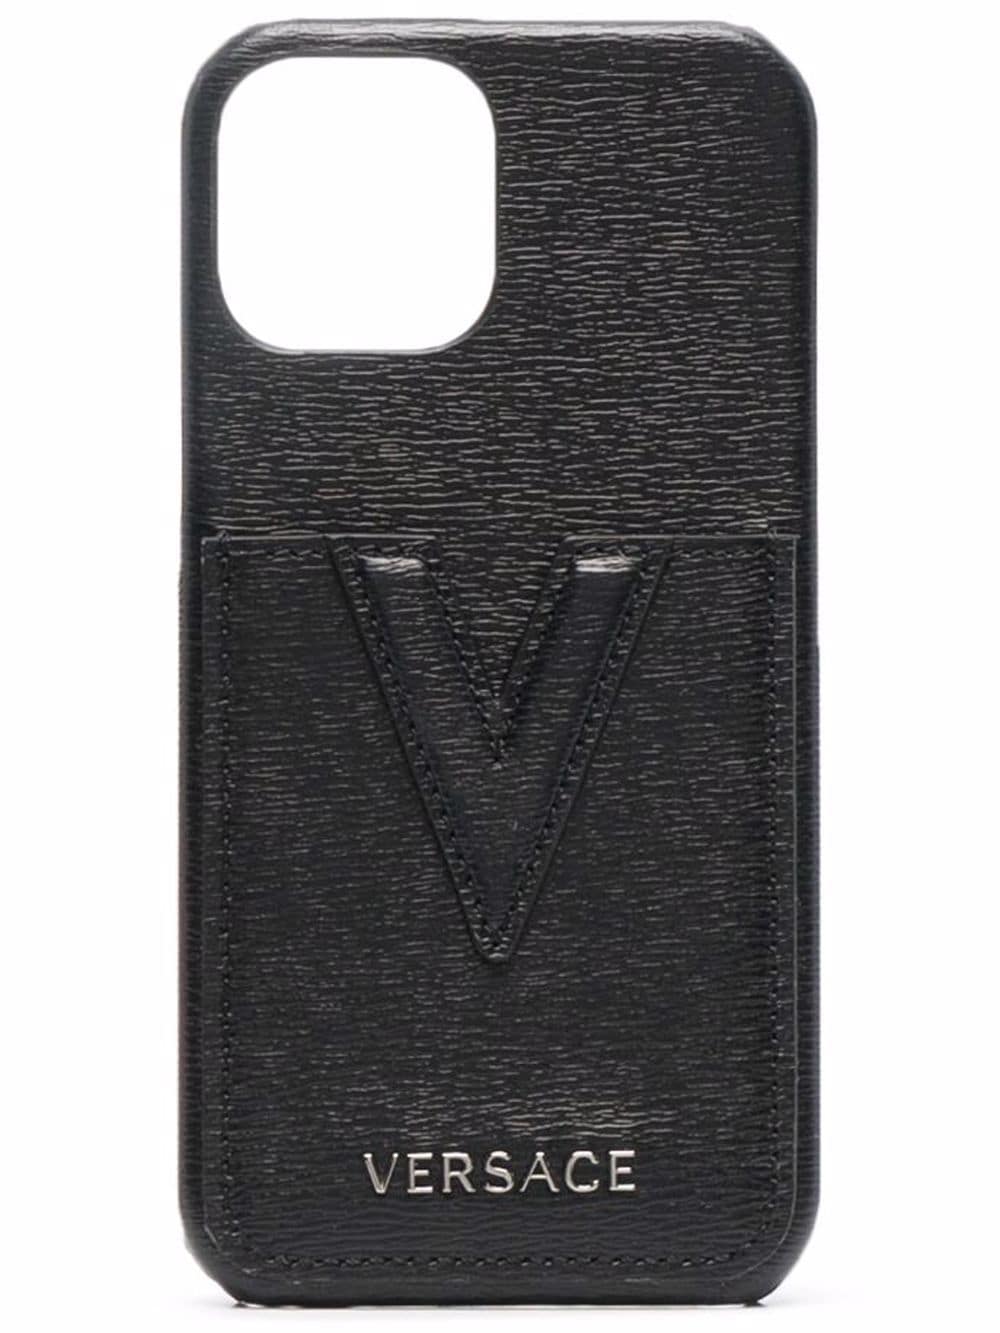 фото Versace чехол для iphone 11 с логотипом